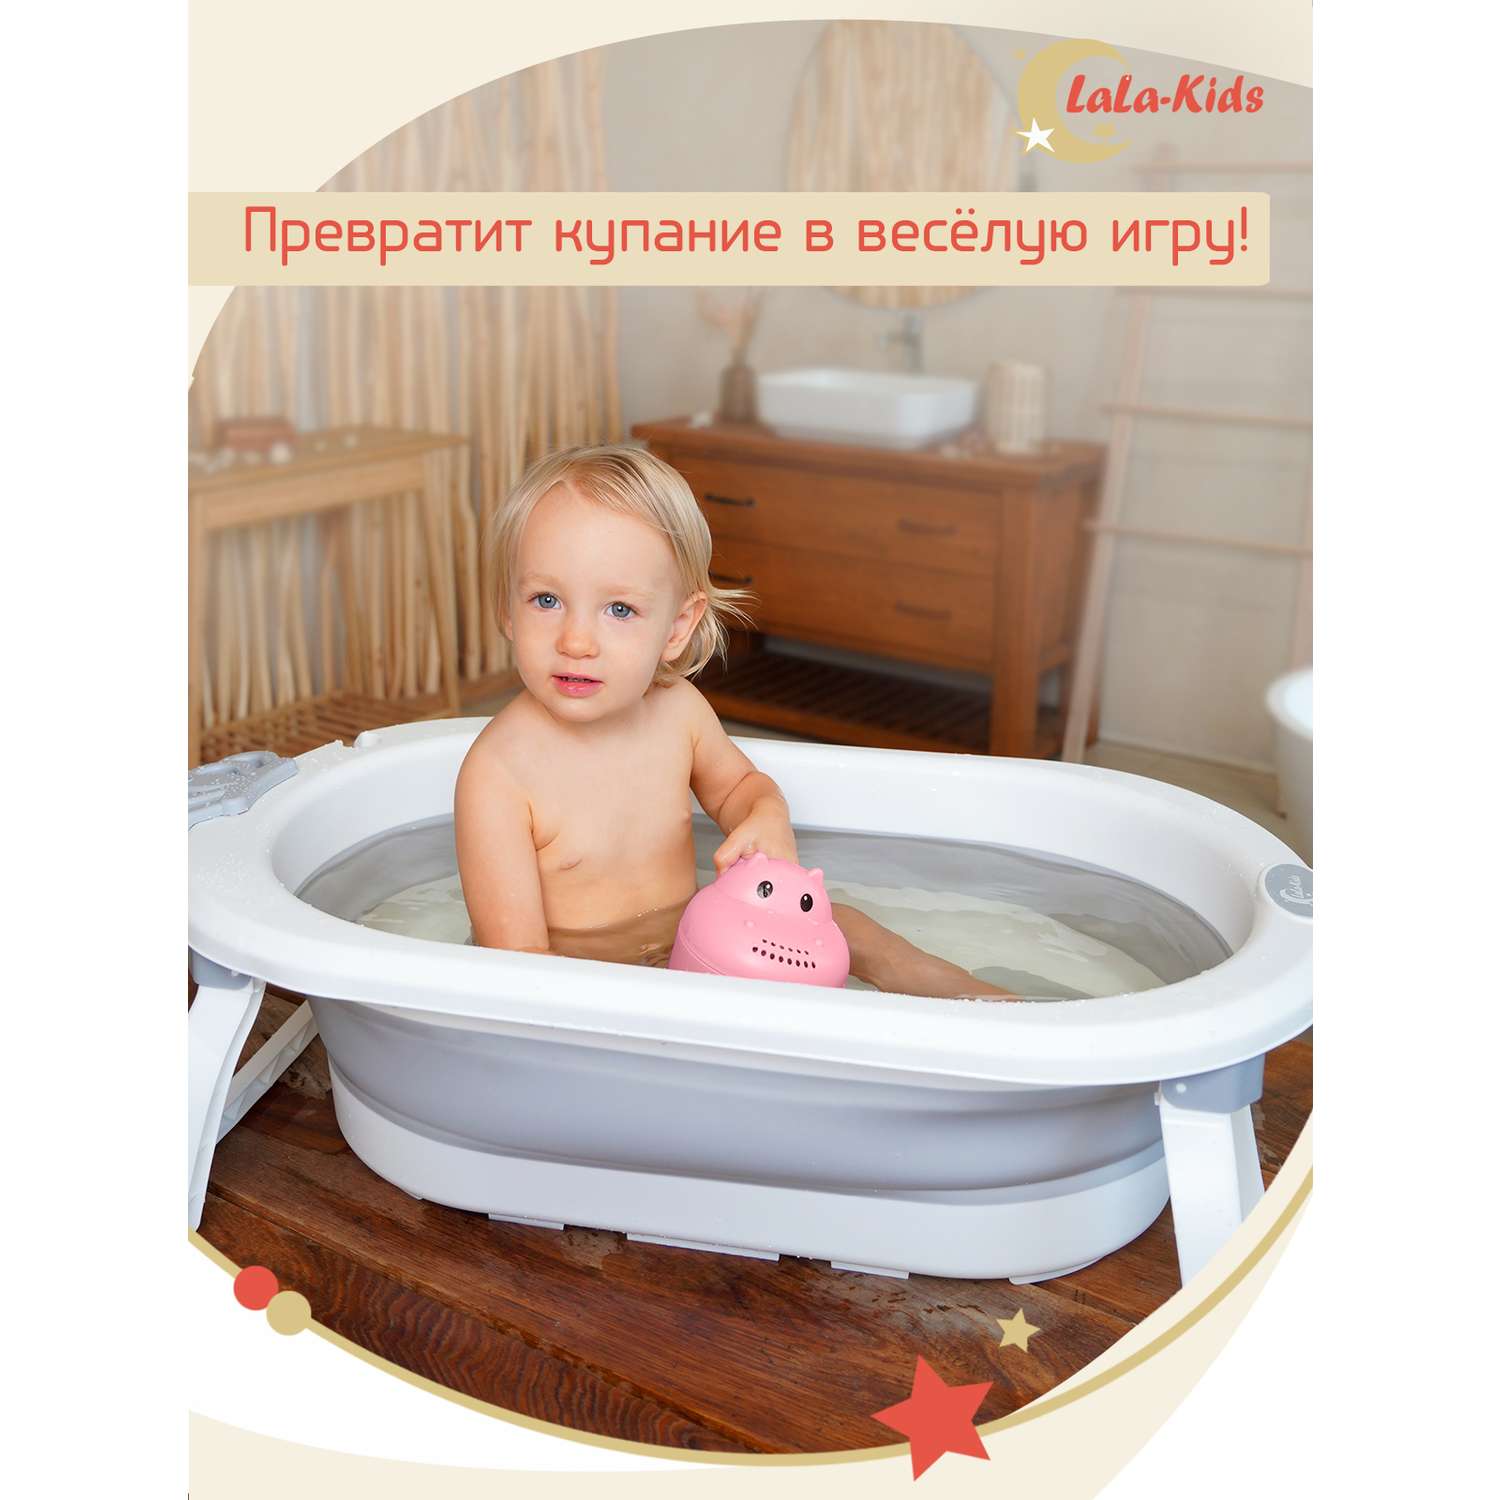 Ковш LaLa-Kids для купания Бегемотик розовый - фото 3